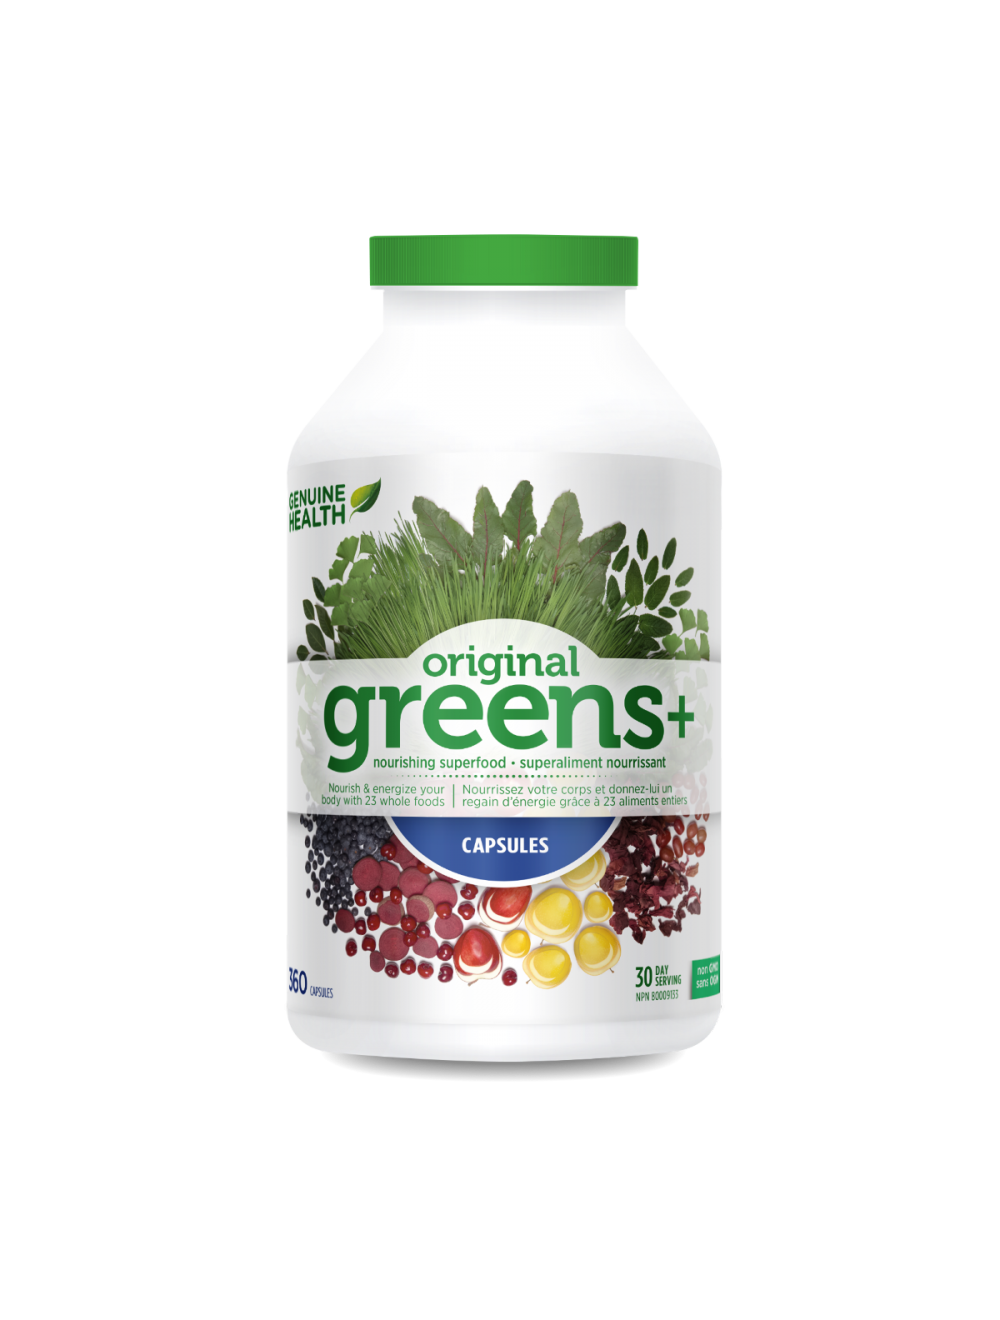 Genuine Health greens+ capsules - 0